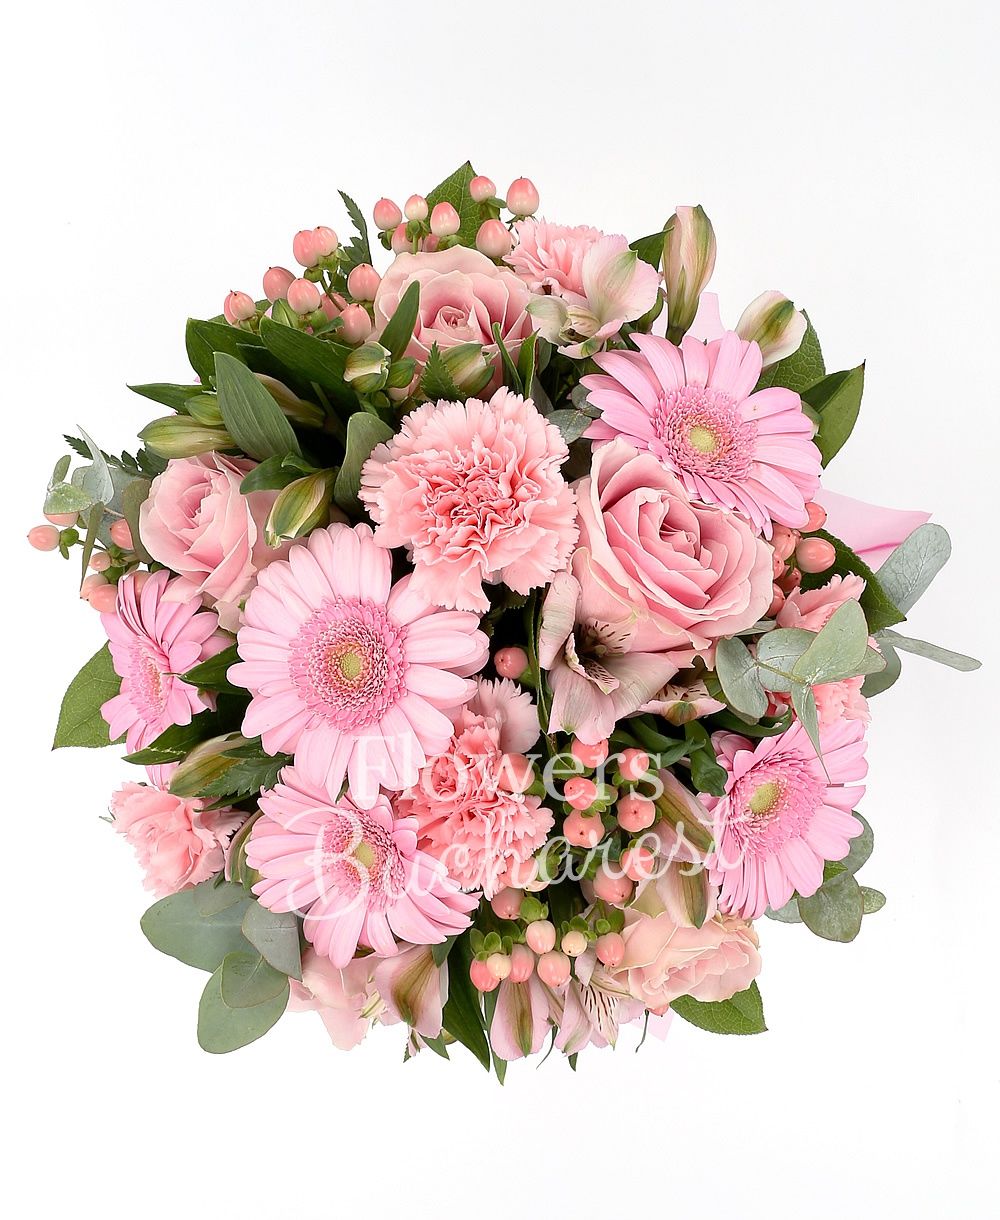 5 pink roses, 5 pink gerbera, 5 pink carnations, 5 pink alstroemeria, 5 pink hypericum, greenery